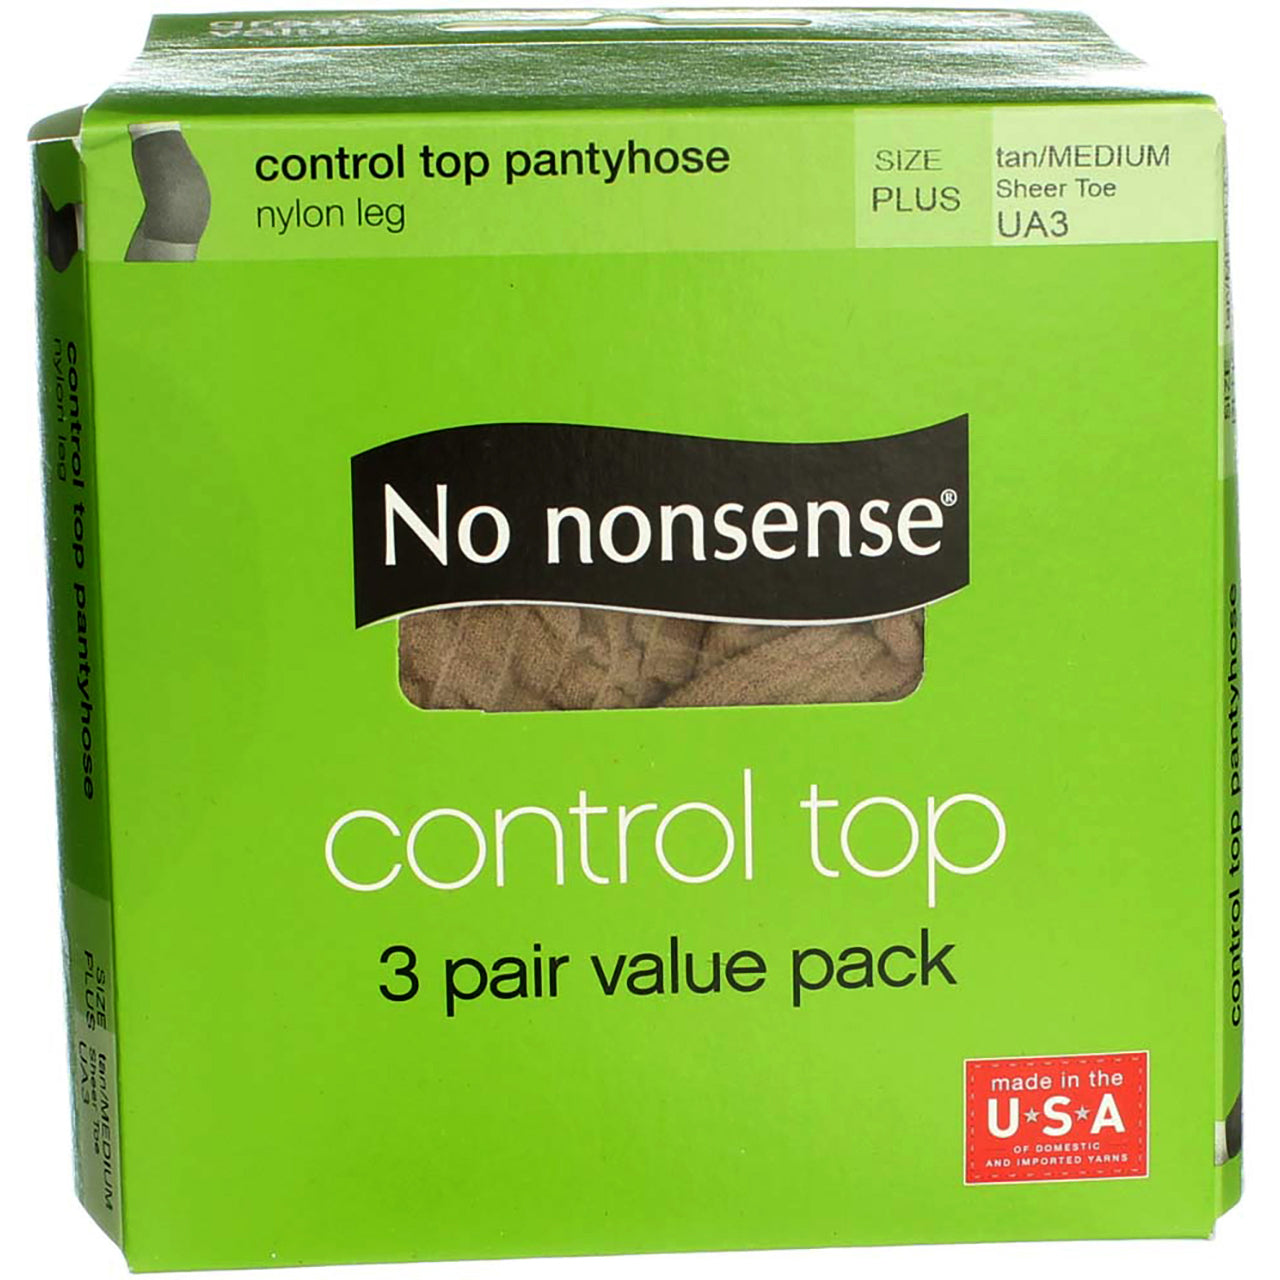 No Nonsense Control Top Nylon Leg Pantyhose, Tan/Medium UA3, Size Plus –  Vitabox